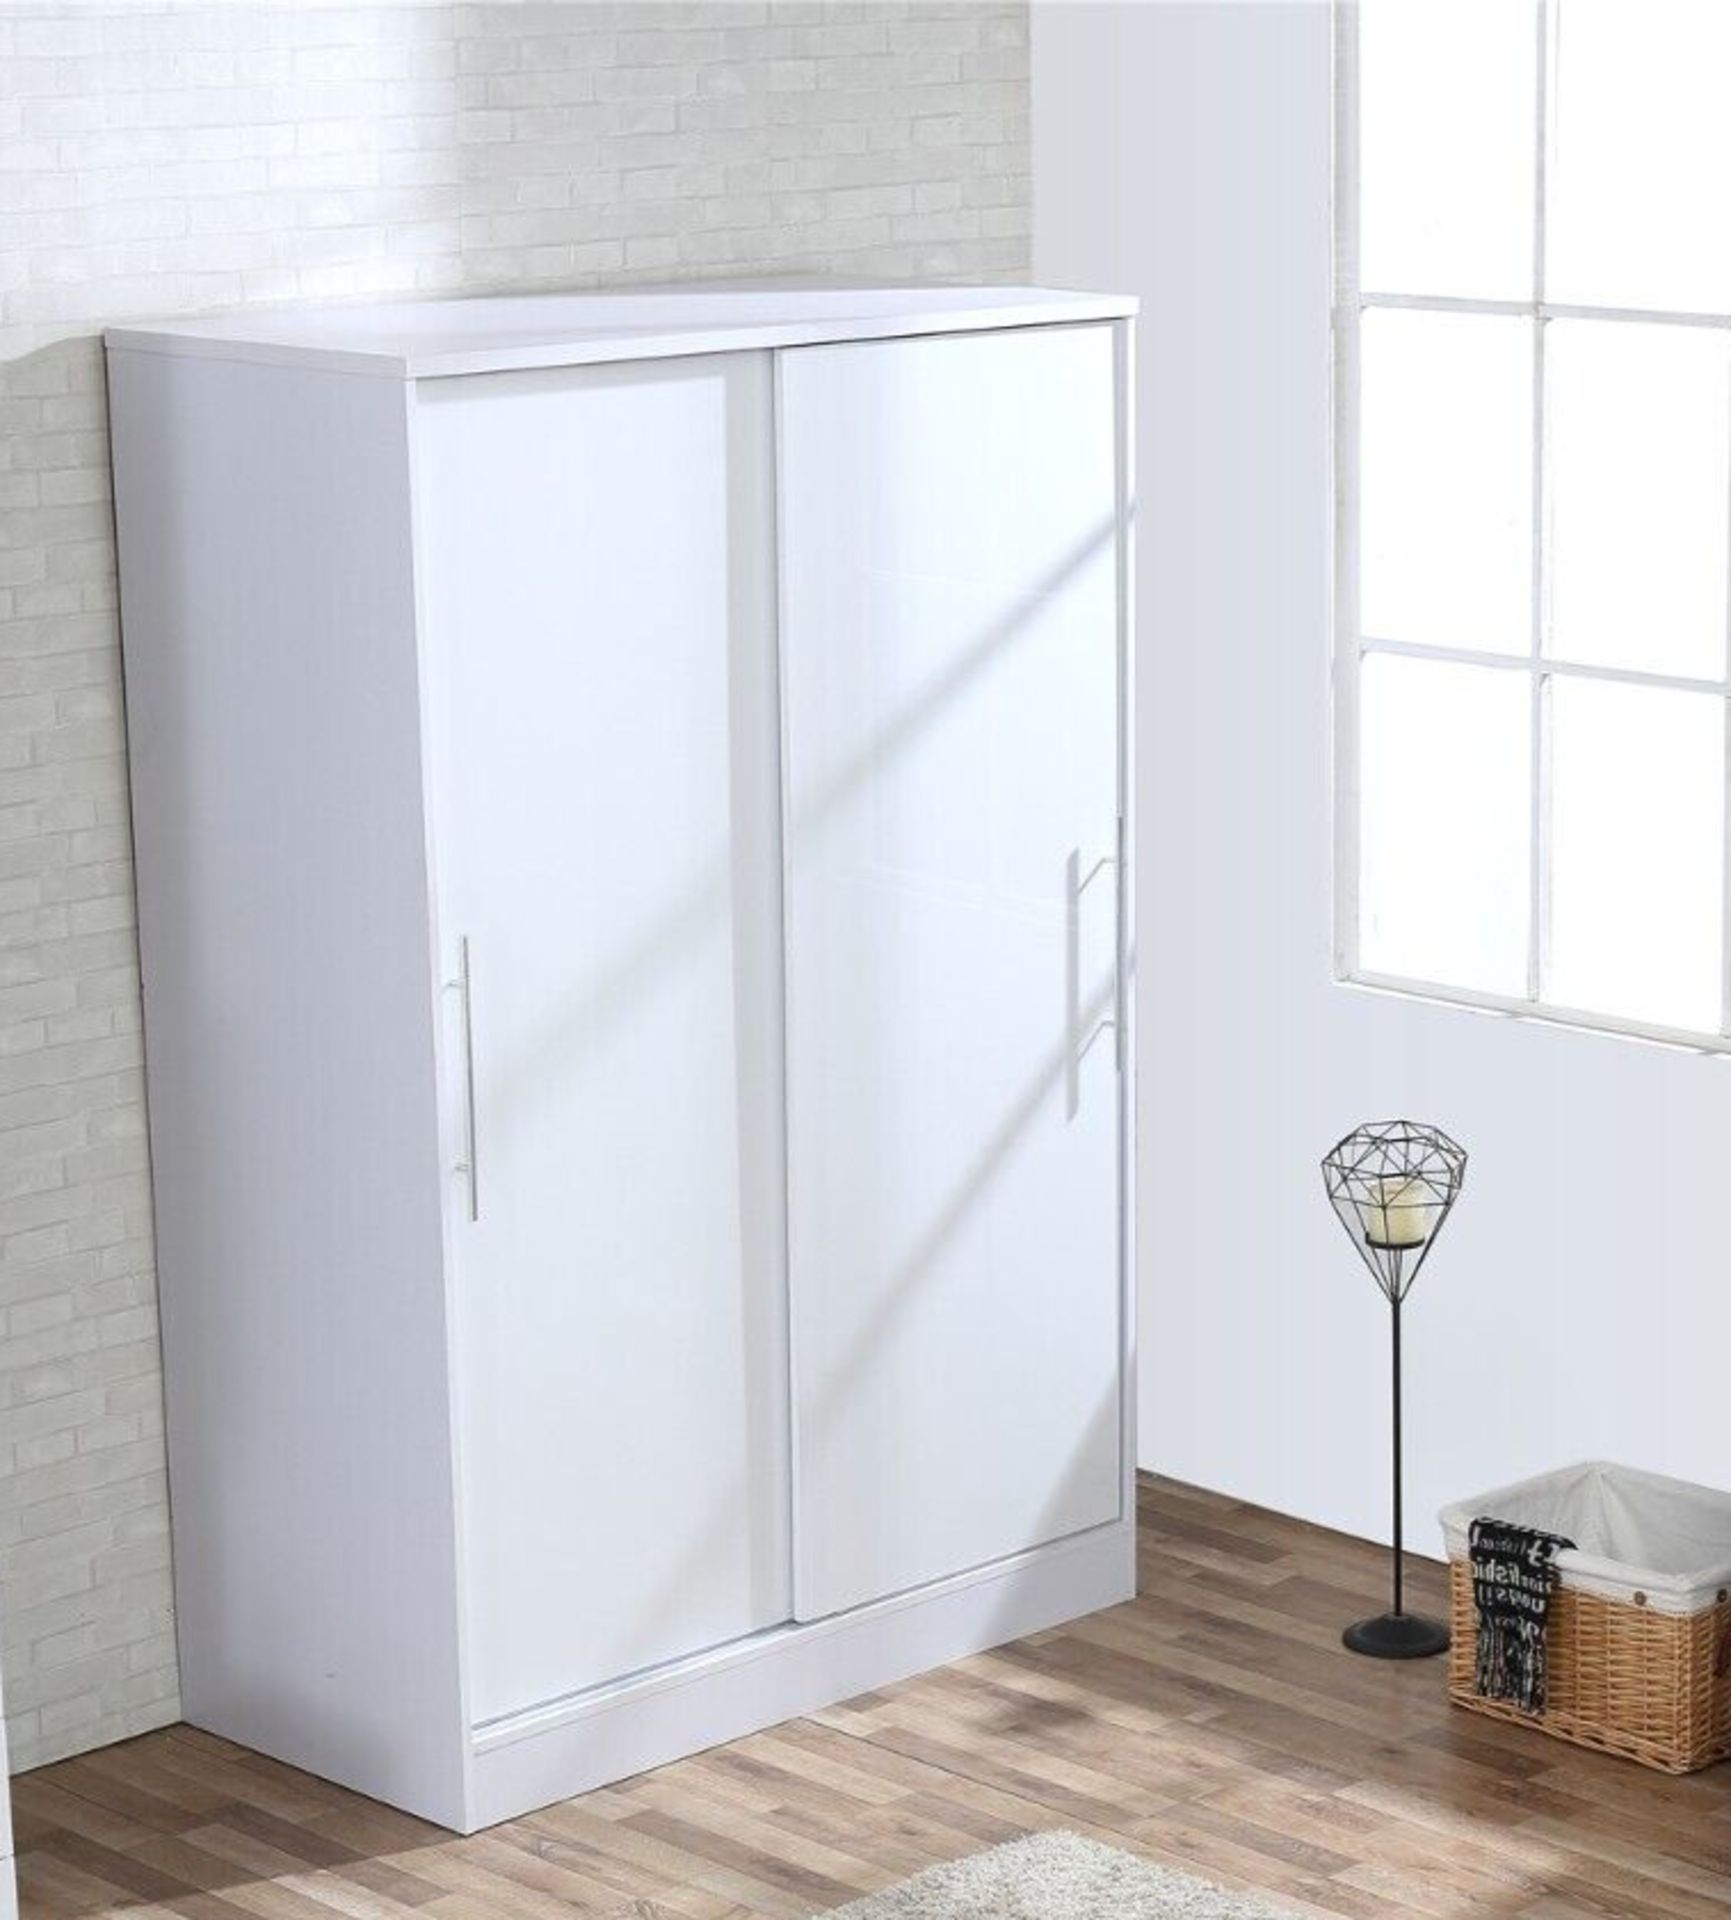 2 DOOR SLIDING WARDROBE XL HIGH GLOSS BEDROOM FURNITURE WHITE ON WHITE - Image 2 of 8